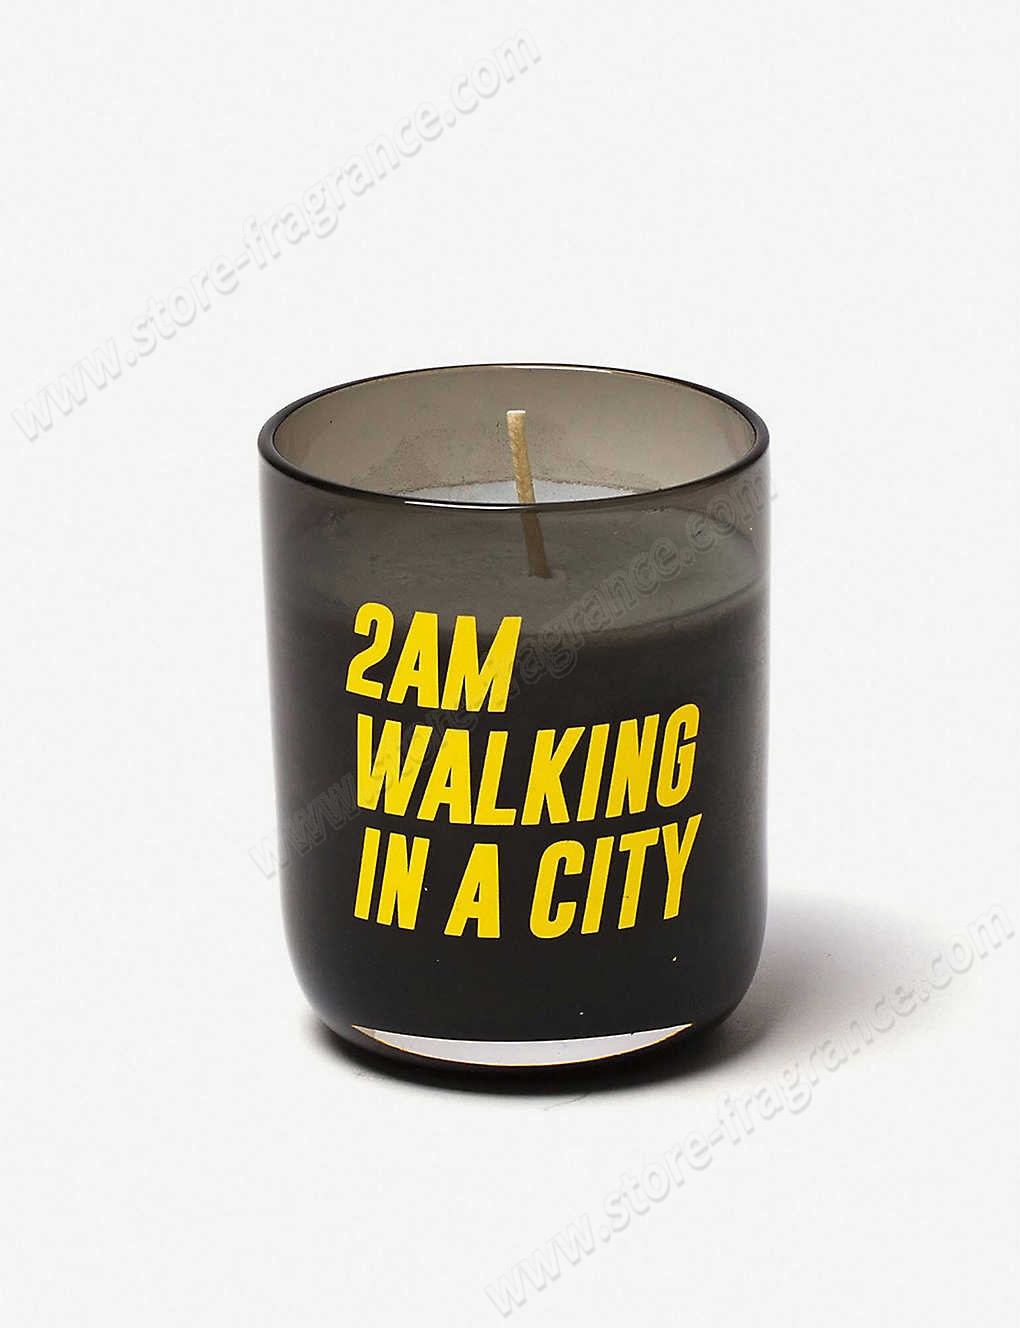 SELETTI/Memories 2am Walking In The City scented candle 110g ✿ Discount Store - SELETTI/Memories 2am Walking In The City scented candle 110g ✿ Discount Store